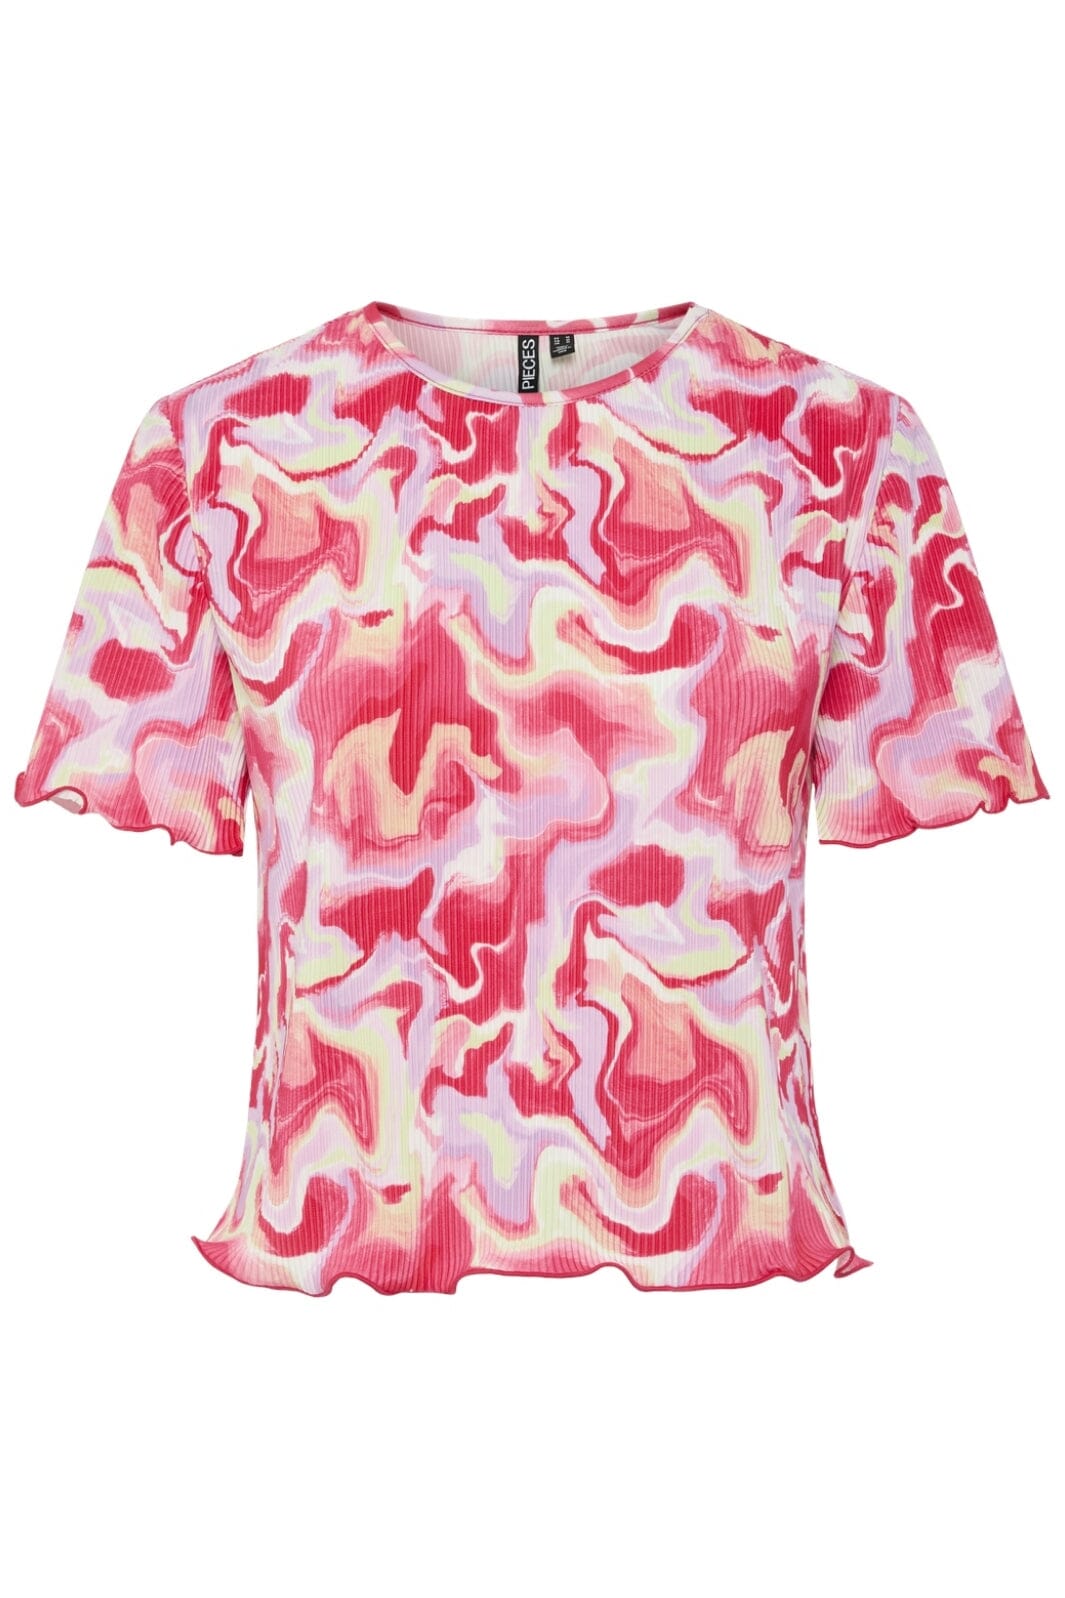 Pieces - Pcmuna Ss Top Pb - 4553350 Hot Coral Abstract T-shirts 